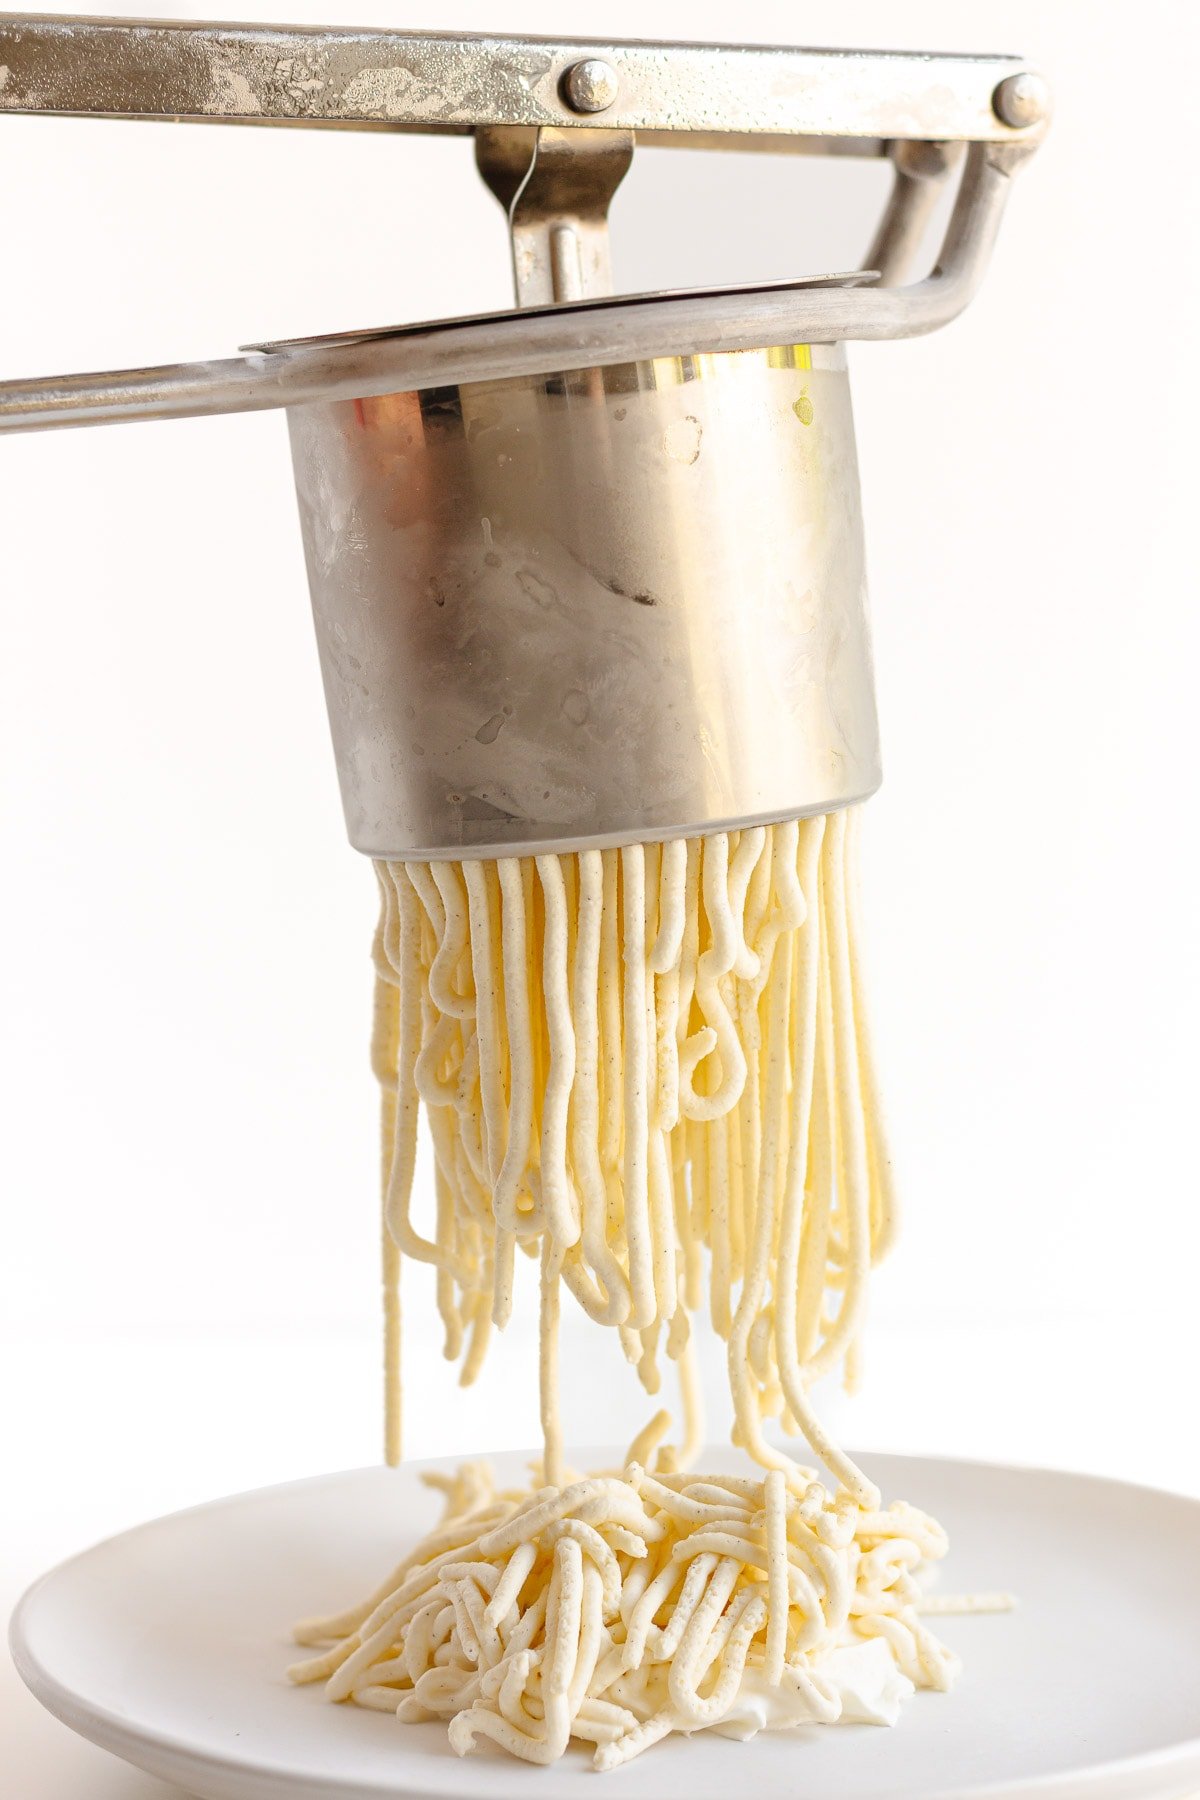 Vanilla ice cream being pressed through a potato ricer to form ice cream "spaghetti" noodles.